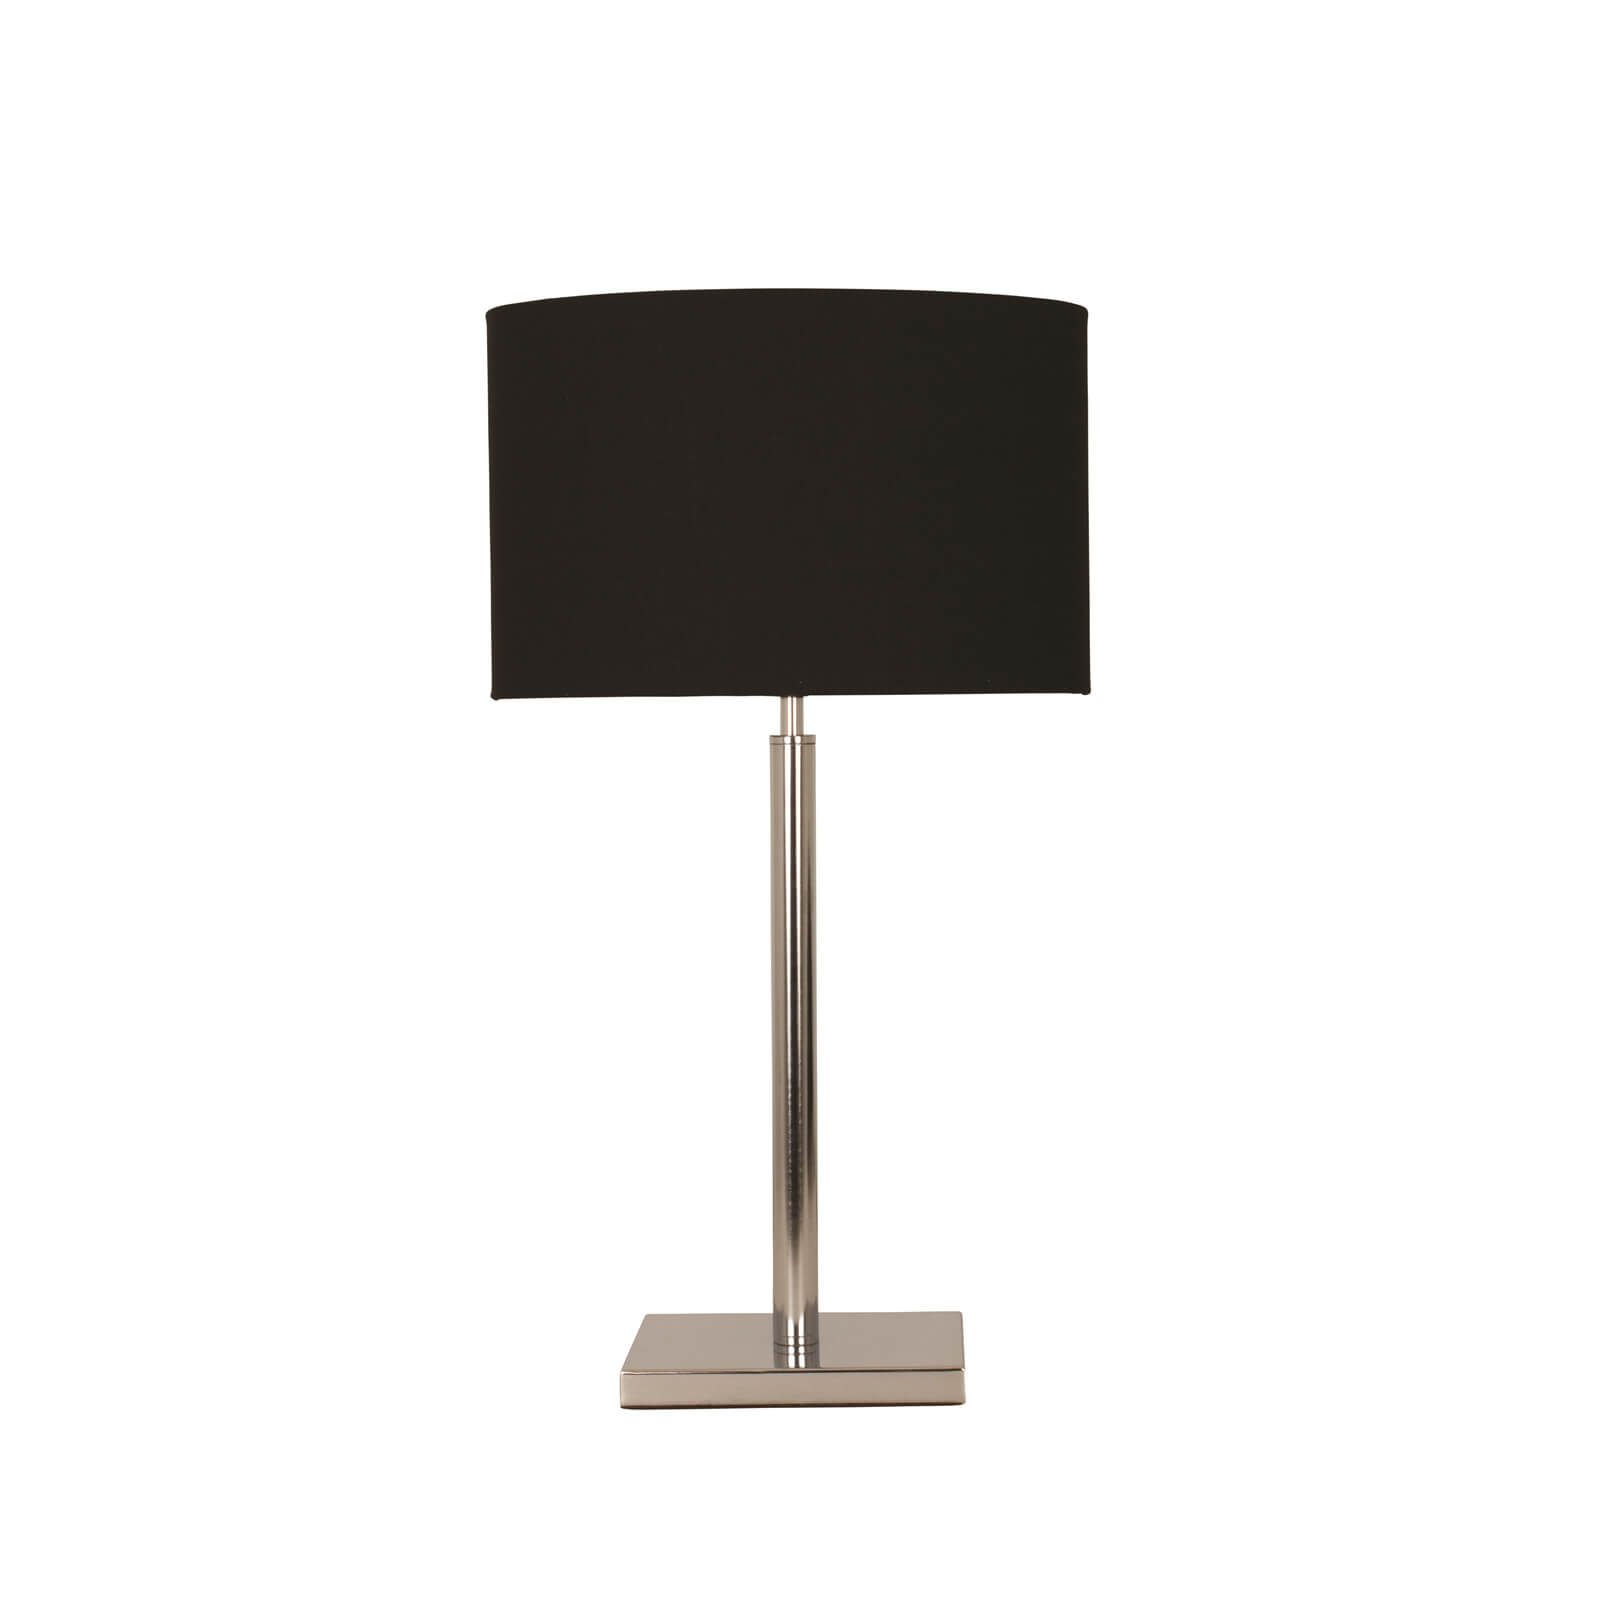 Thomas Rectangular Table Lamp - Black and Chrome